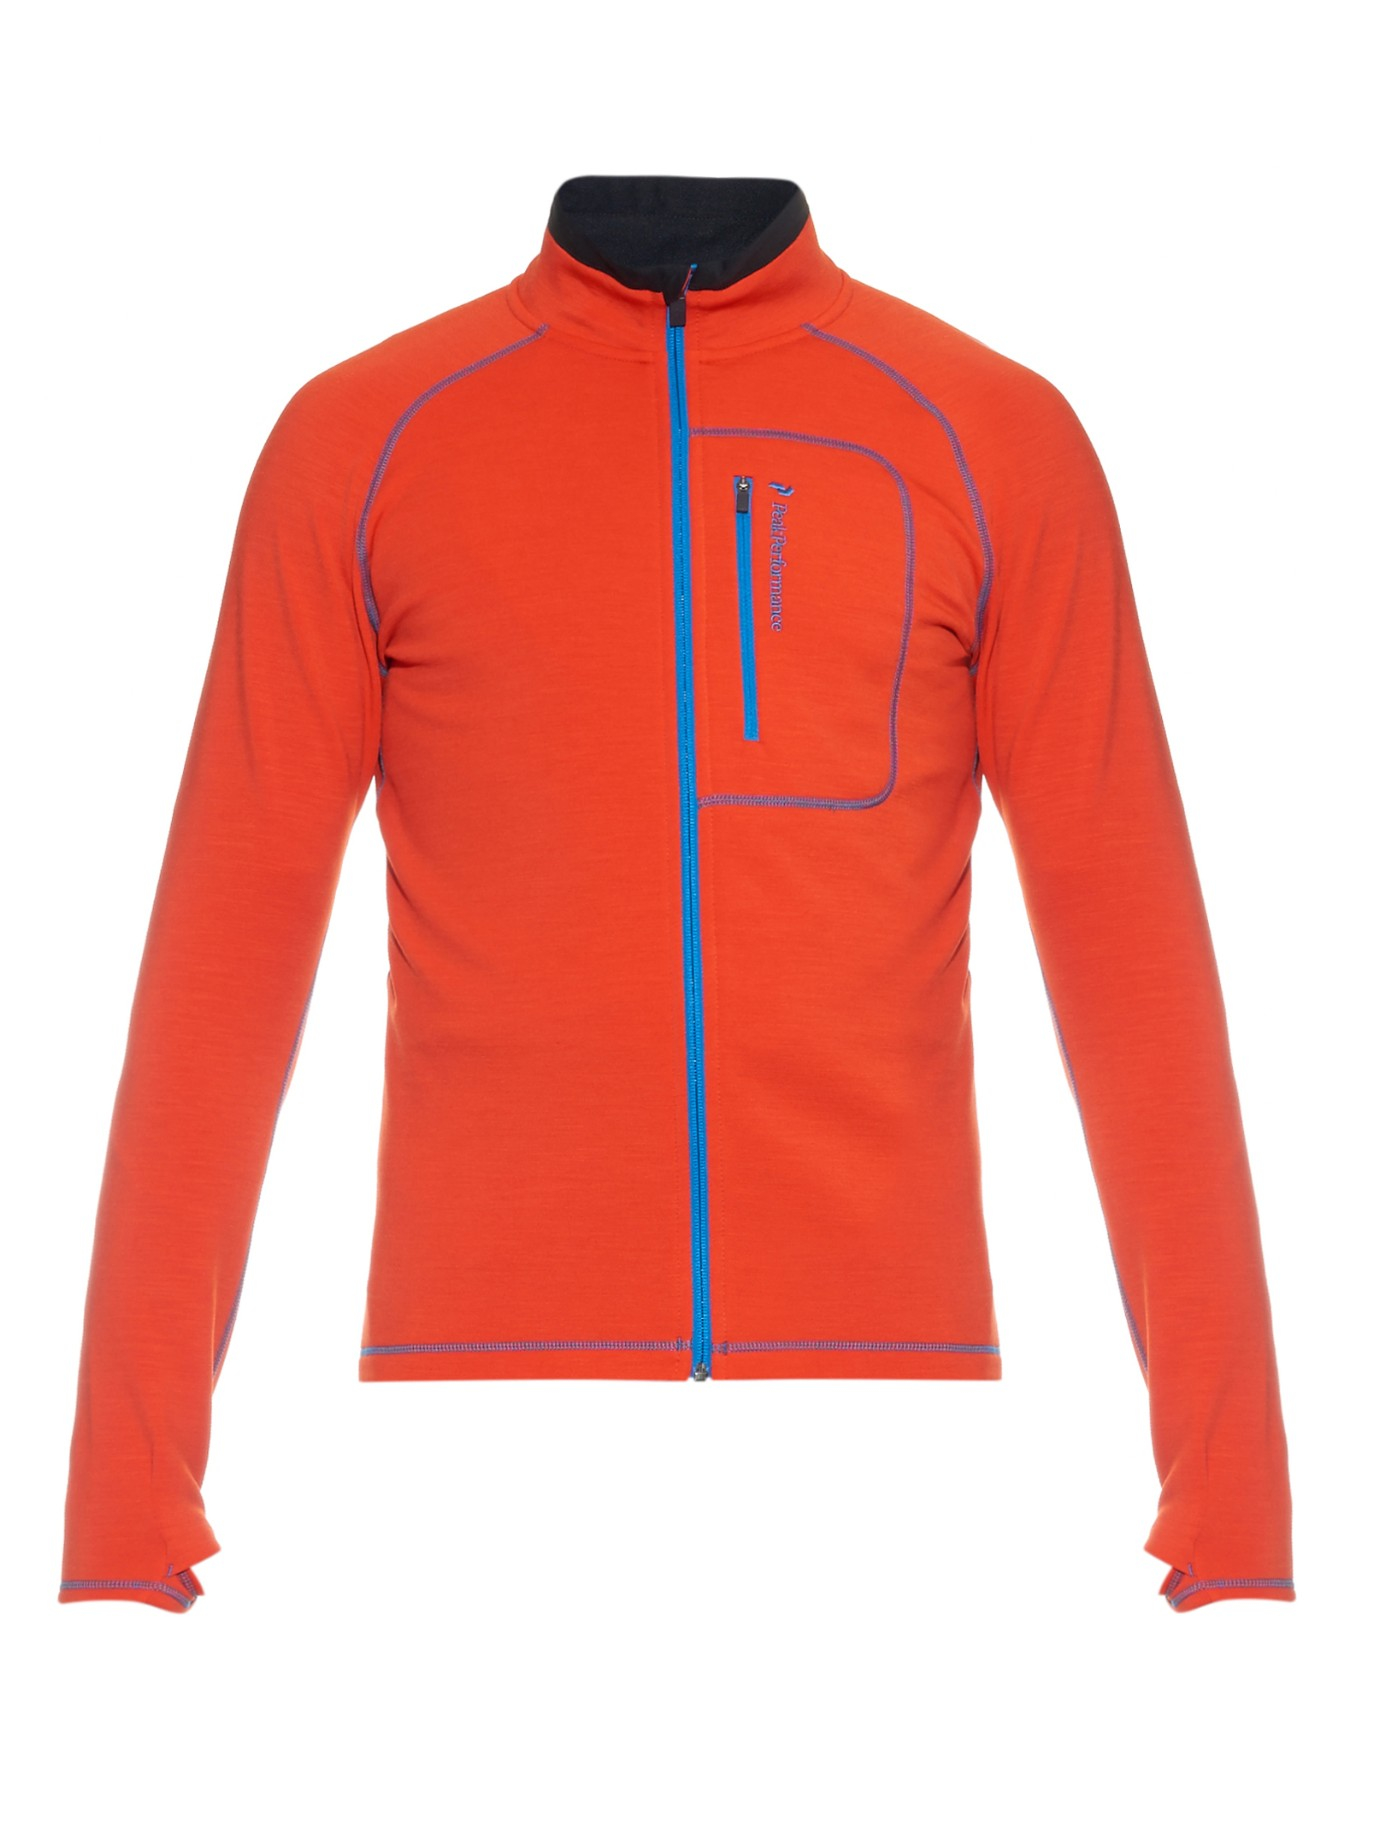 Peak Performance Fleece Heli Mid-layer Ski Jacket in Orange for Men - Lyst